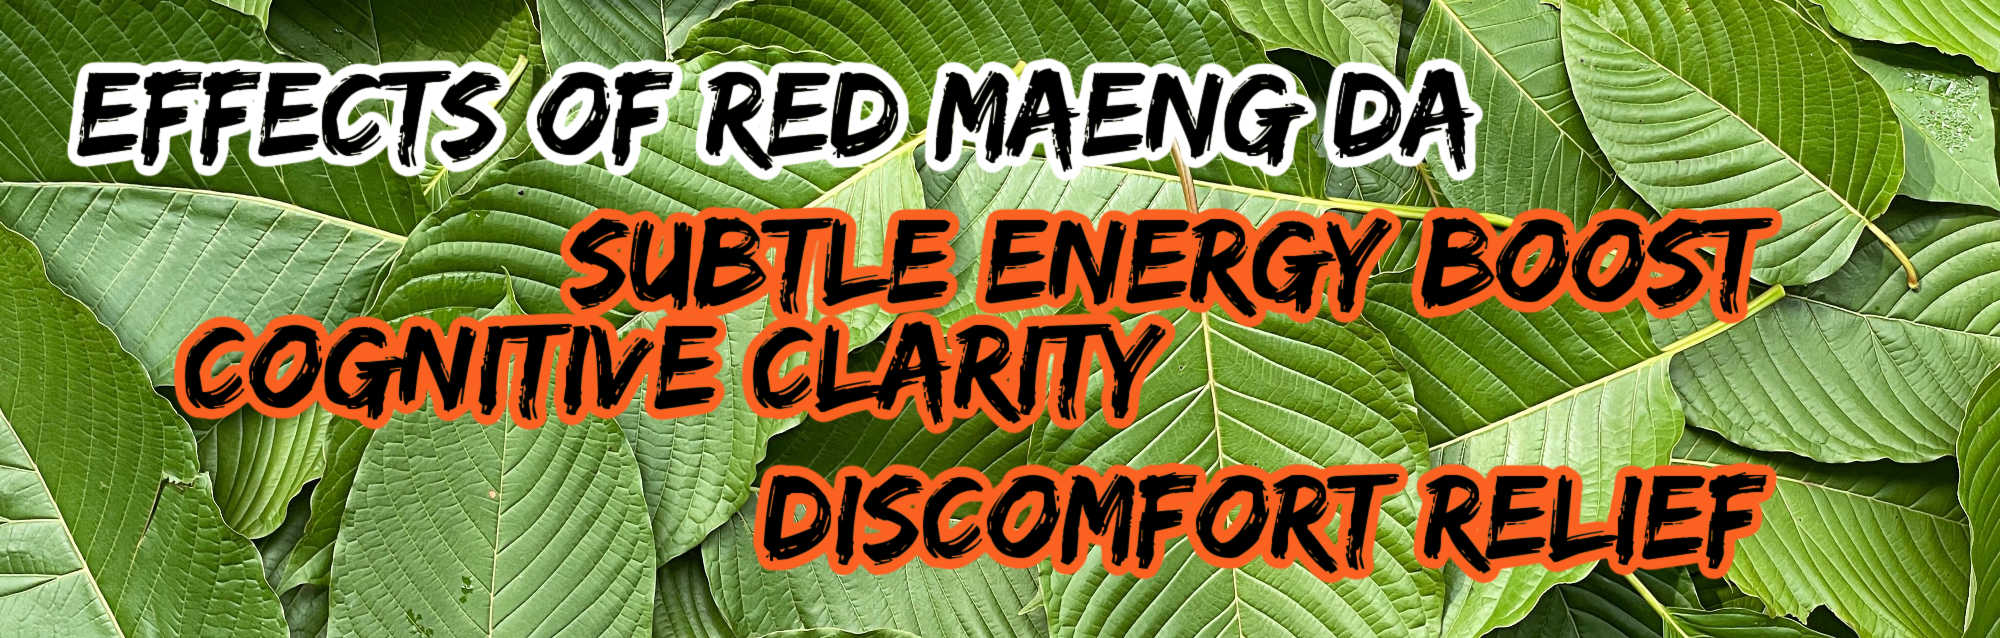 image of red maeng da kratom